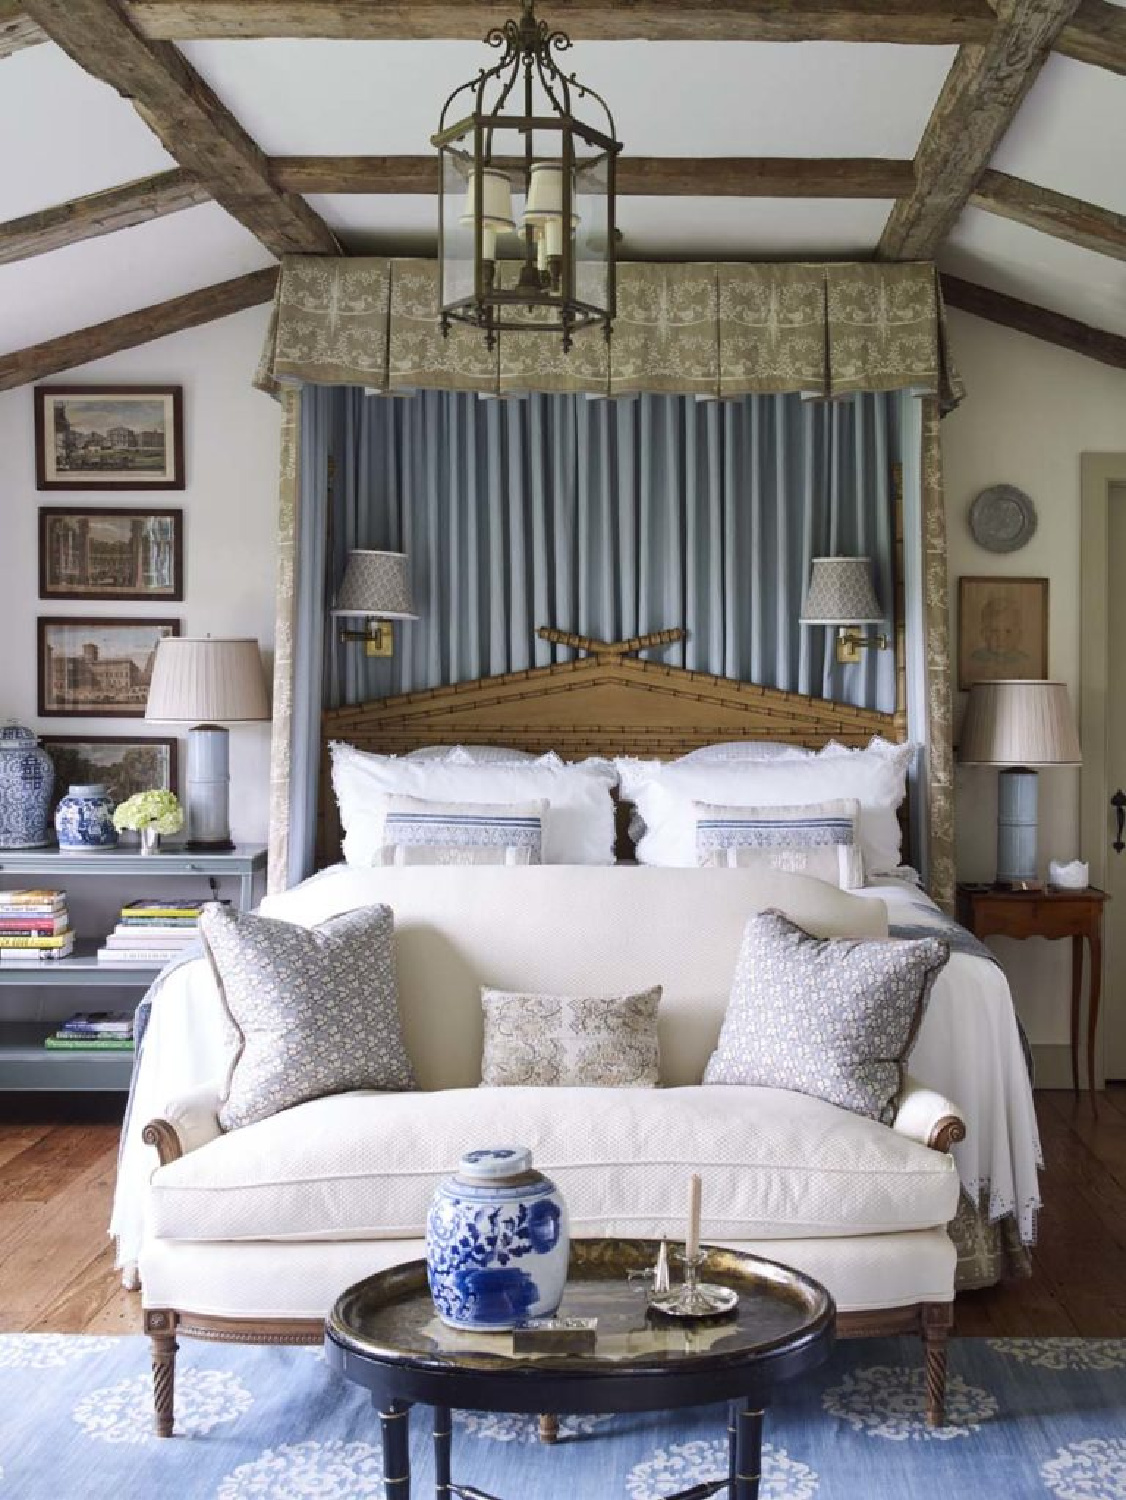 Elegant traditional interior design by Cathy Kincaid. #traditionalstyle #elegantdecor #timelessdesign